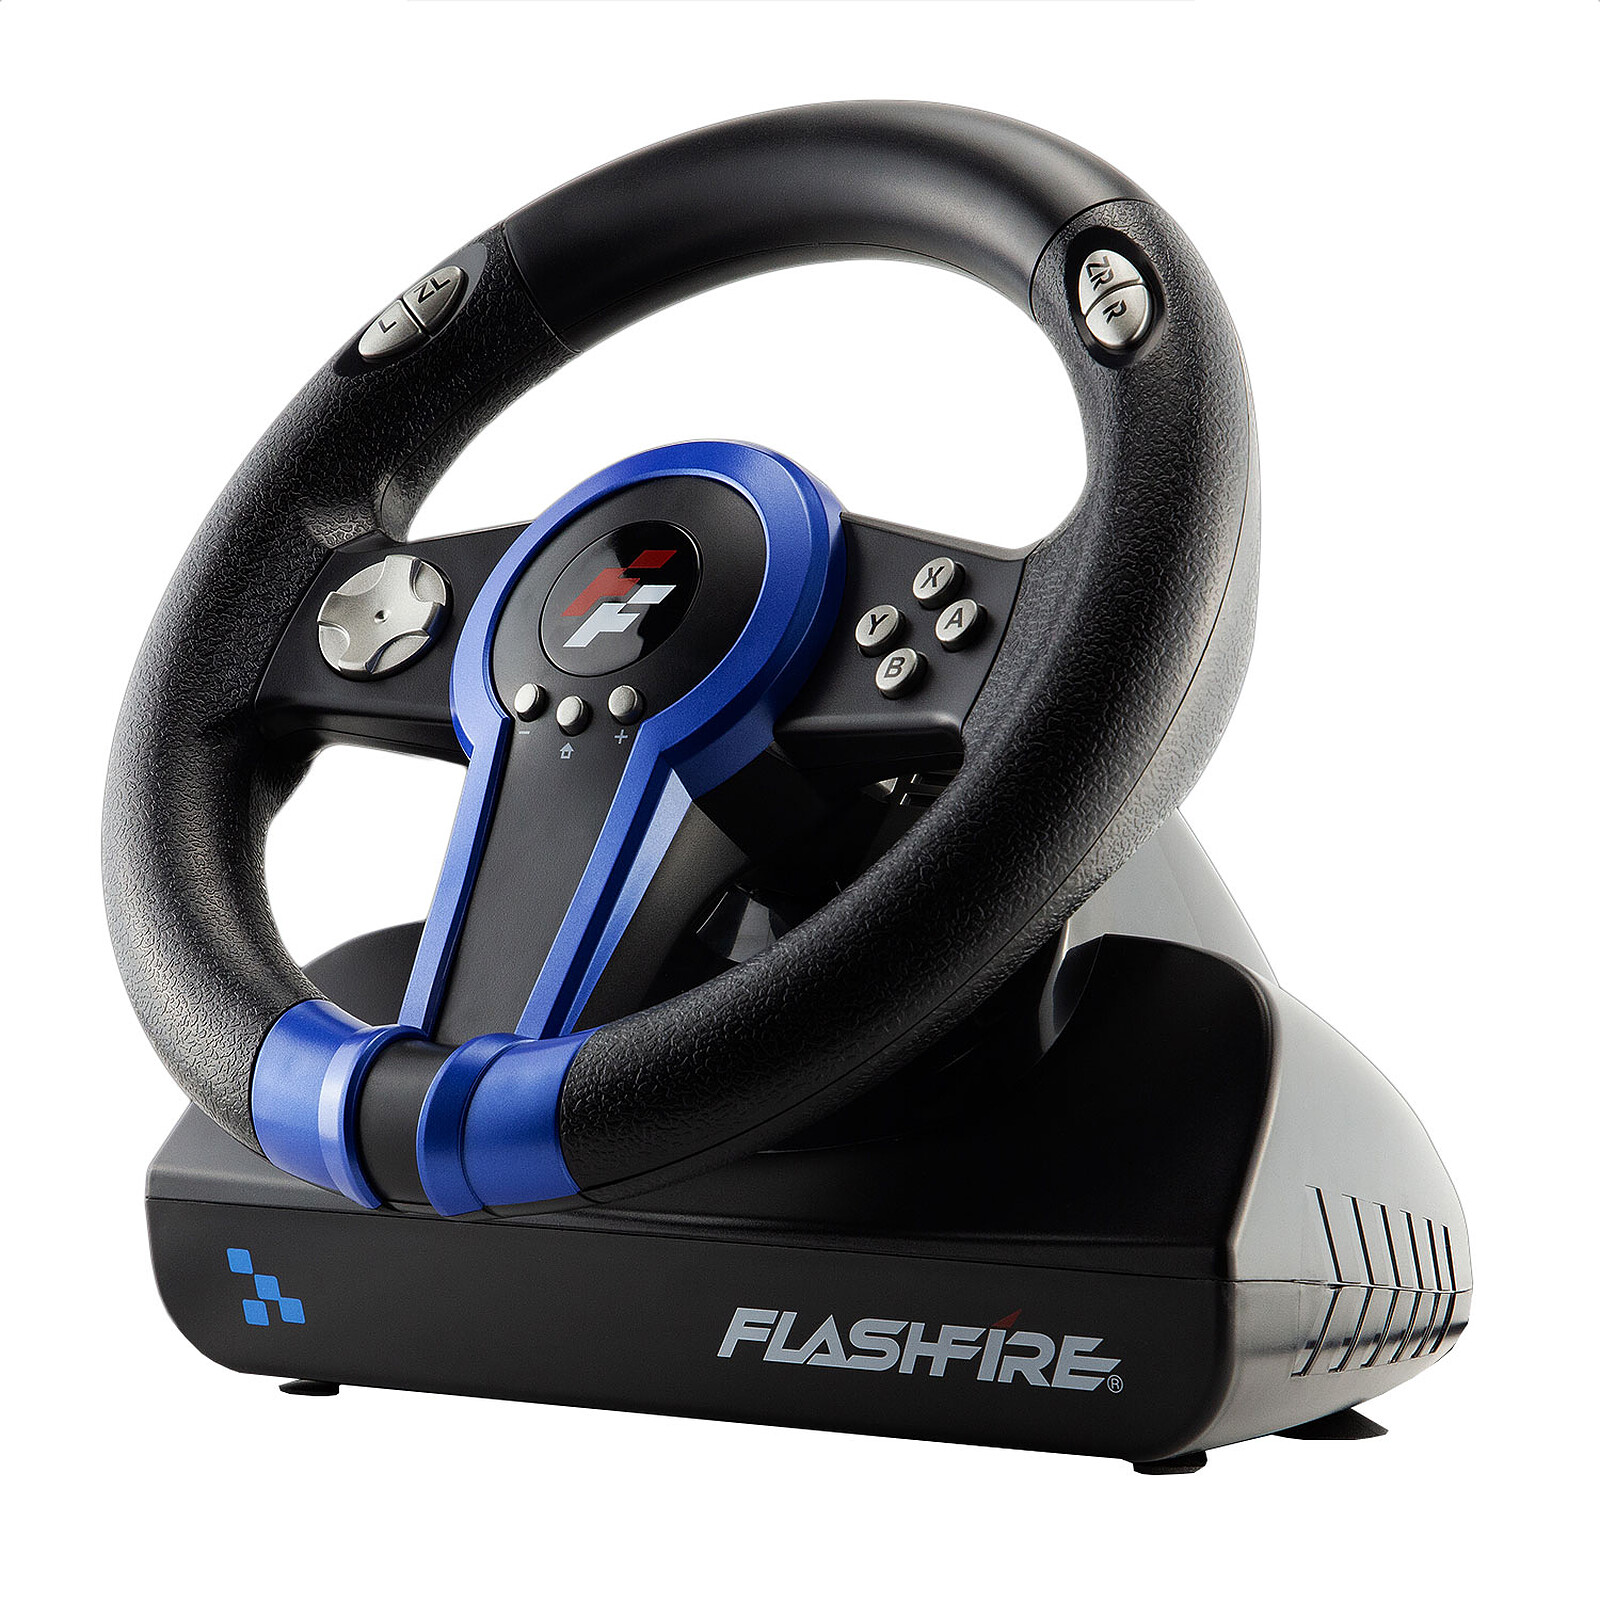 Flashfire Drift Wheel - Volant PC - Garantie 3 ans LDLC